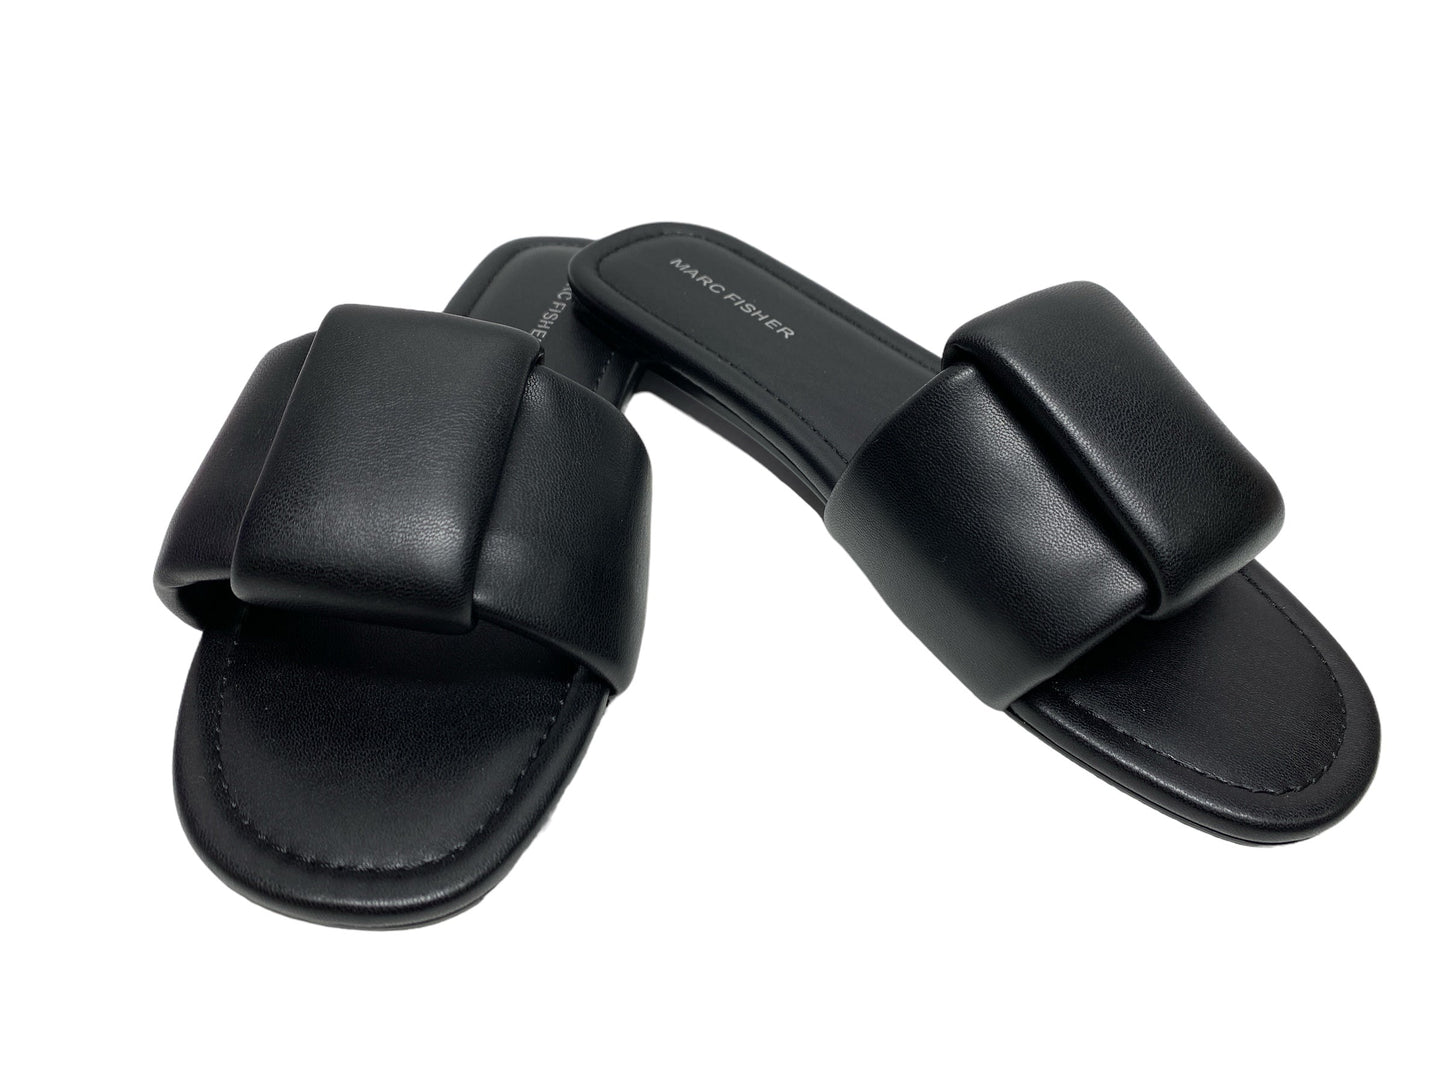 Black Sandals Flats Marc Fisher, Size 8